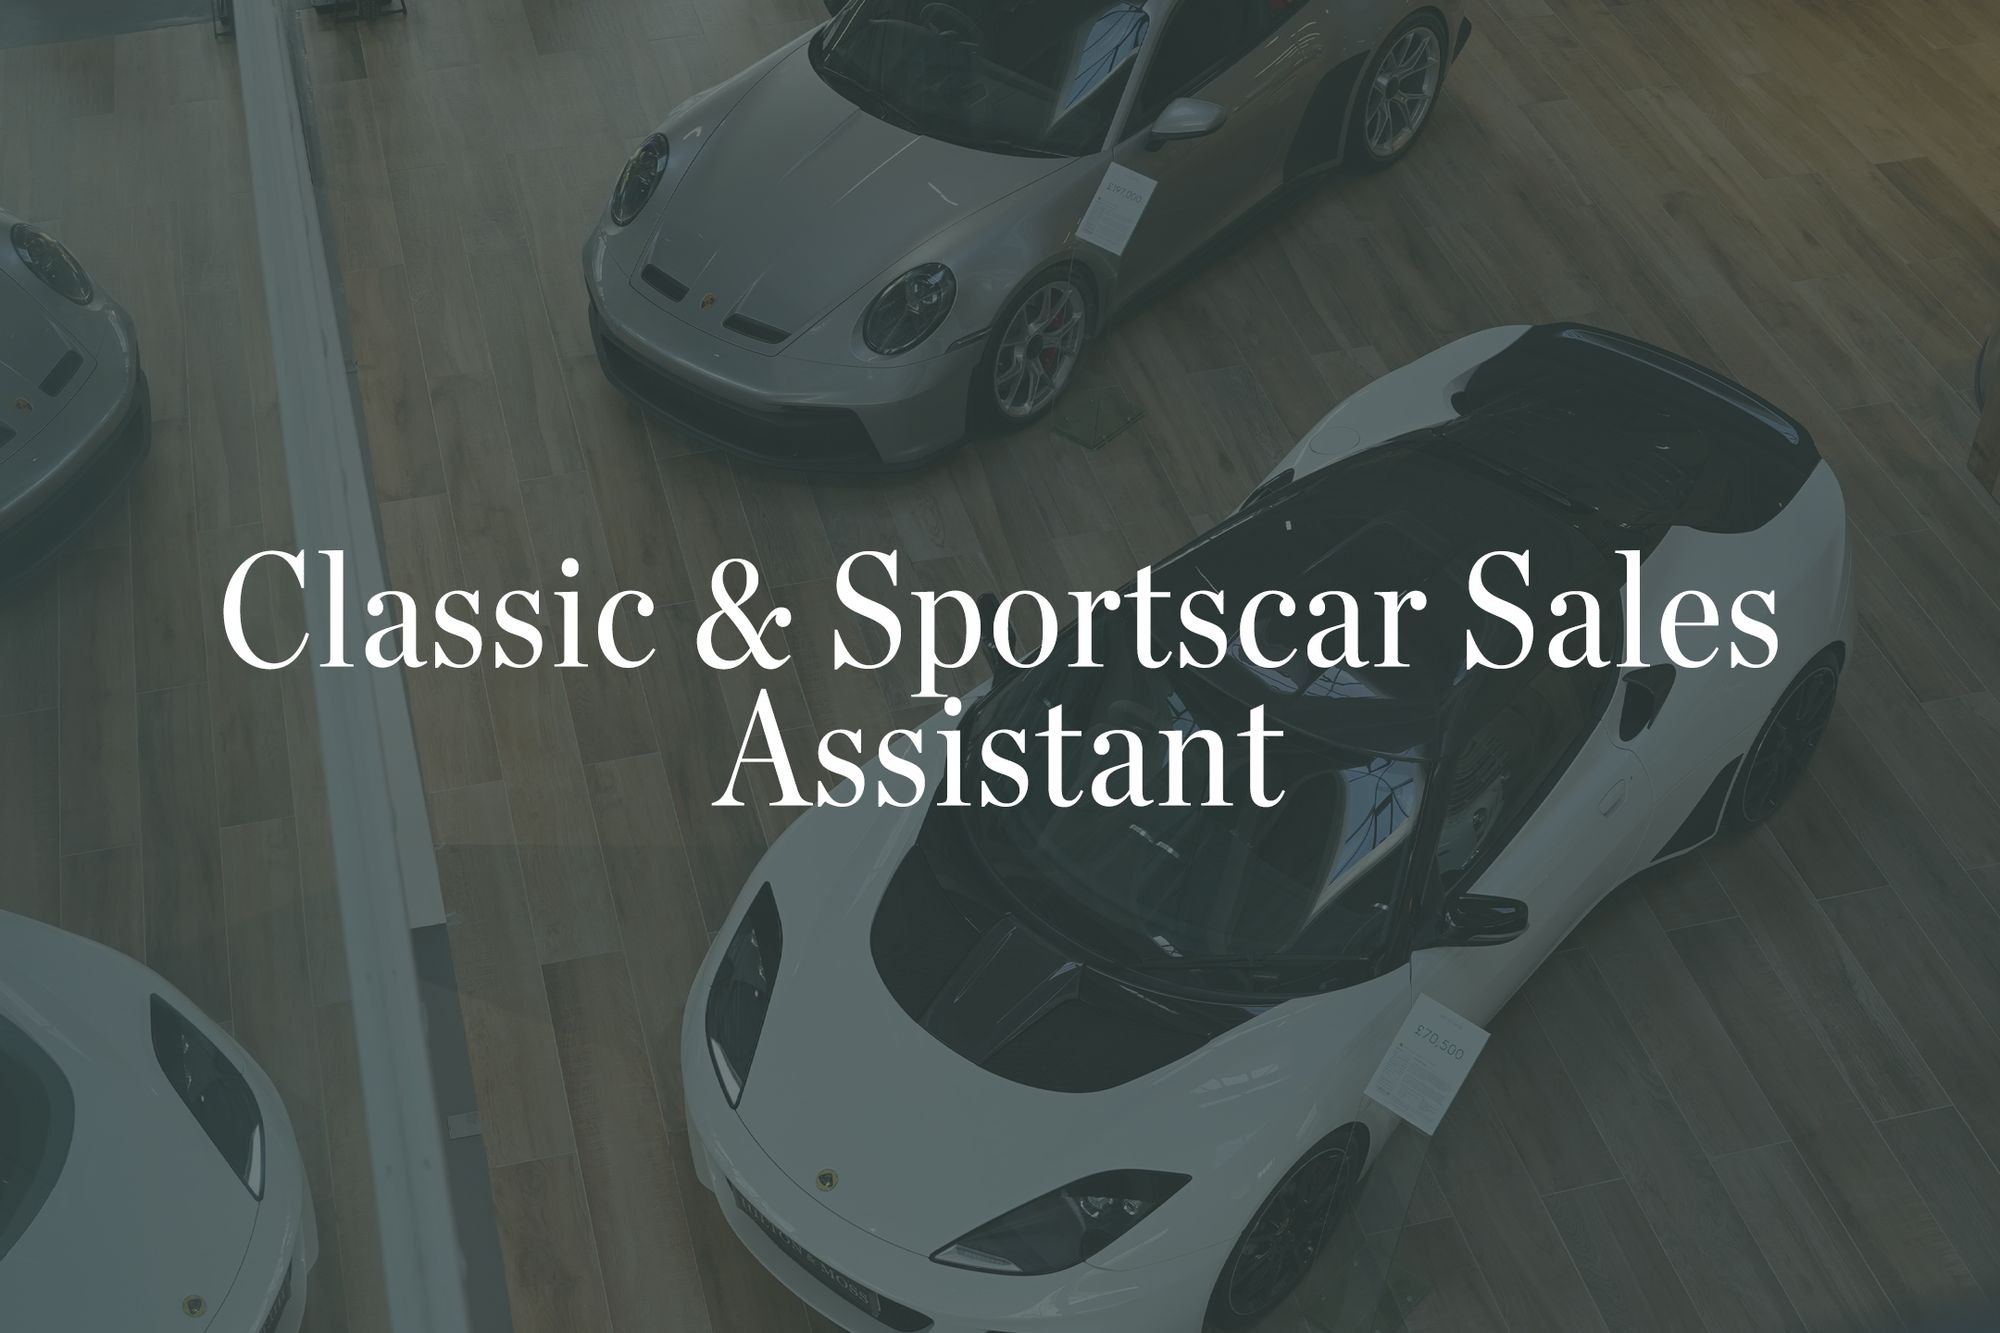 Classic & Sportscar Sales Assistant